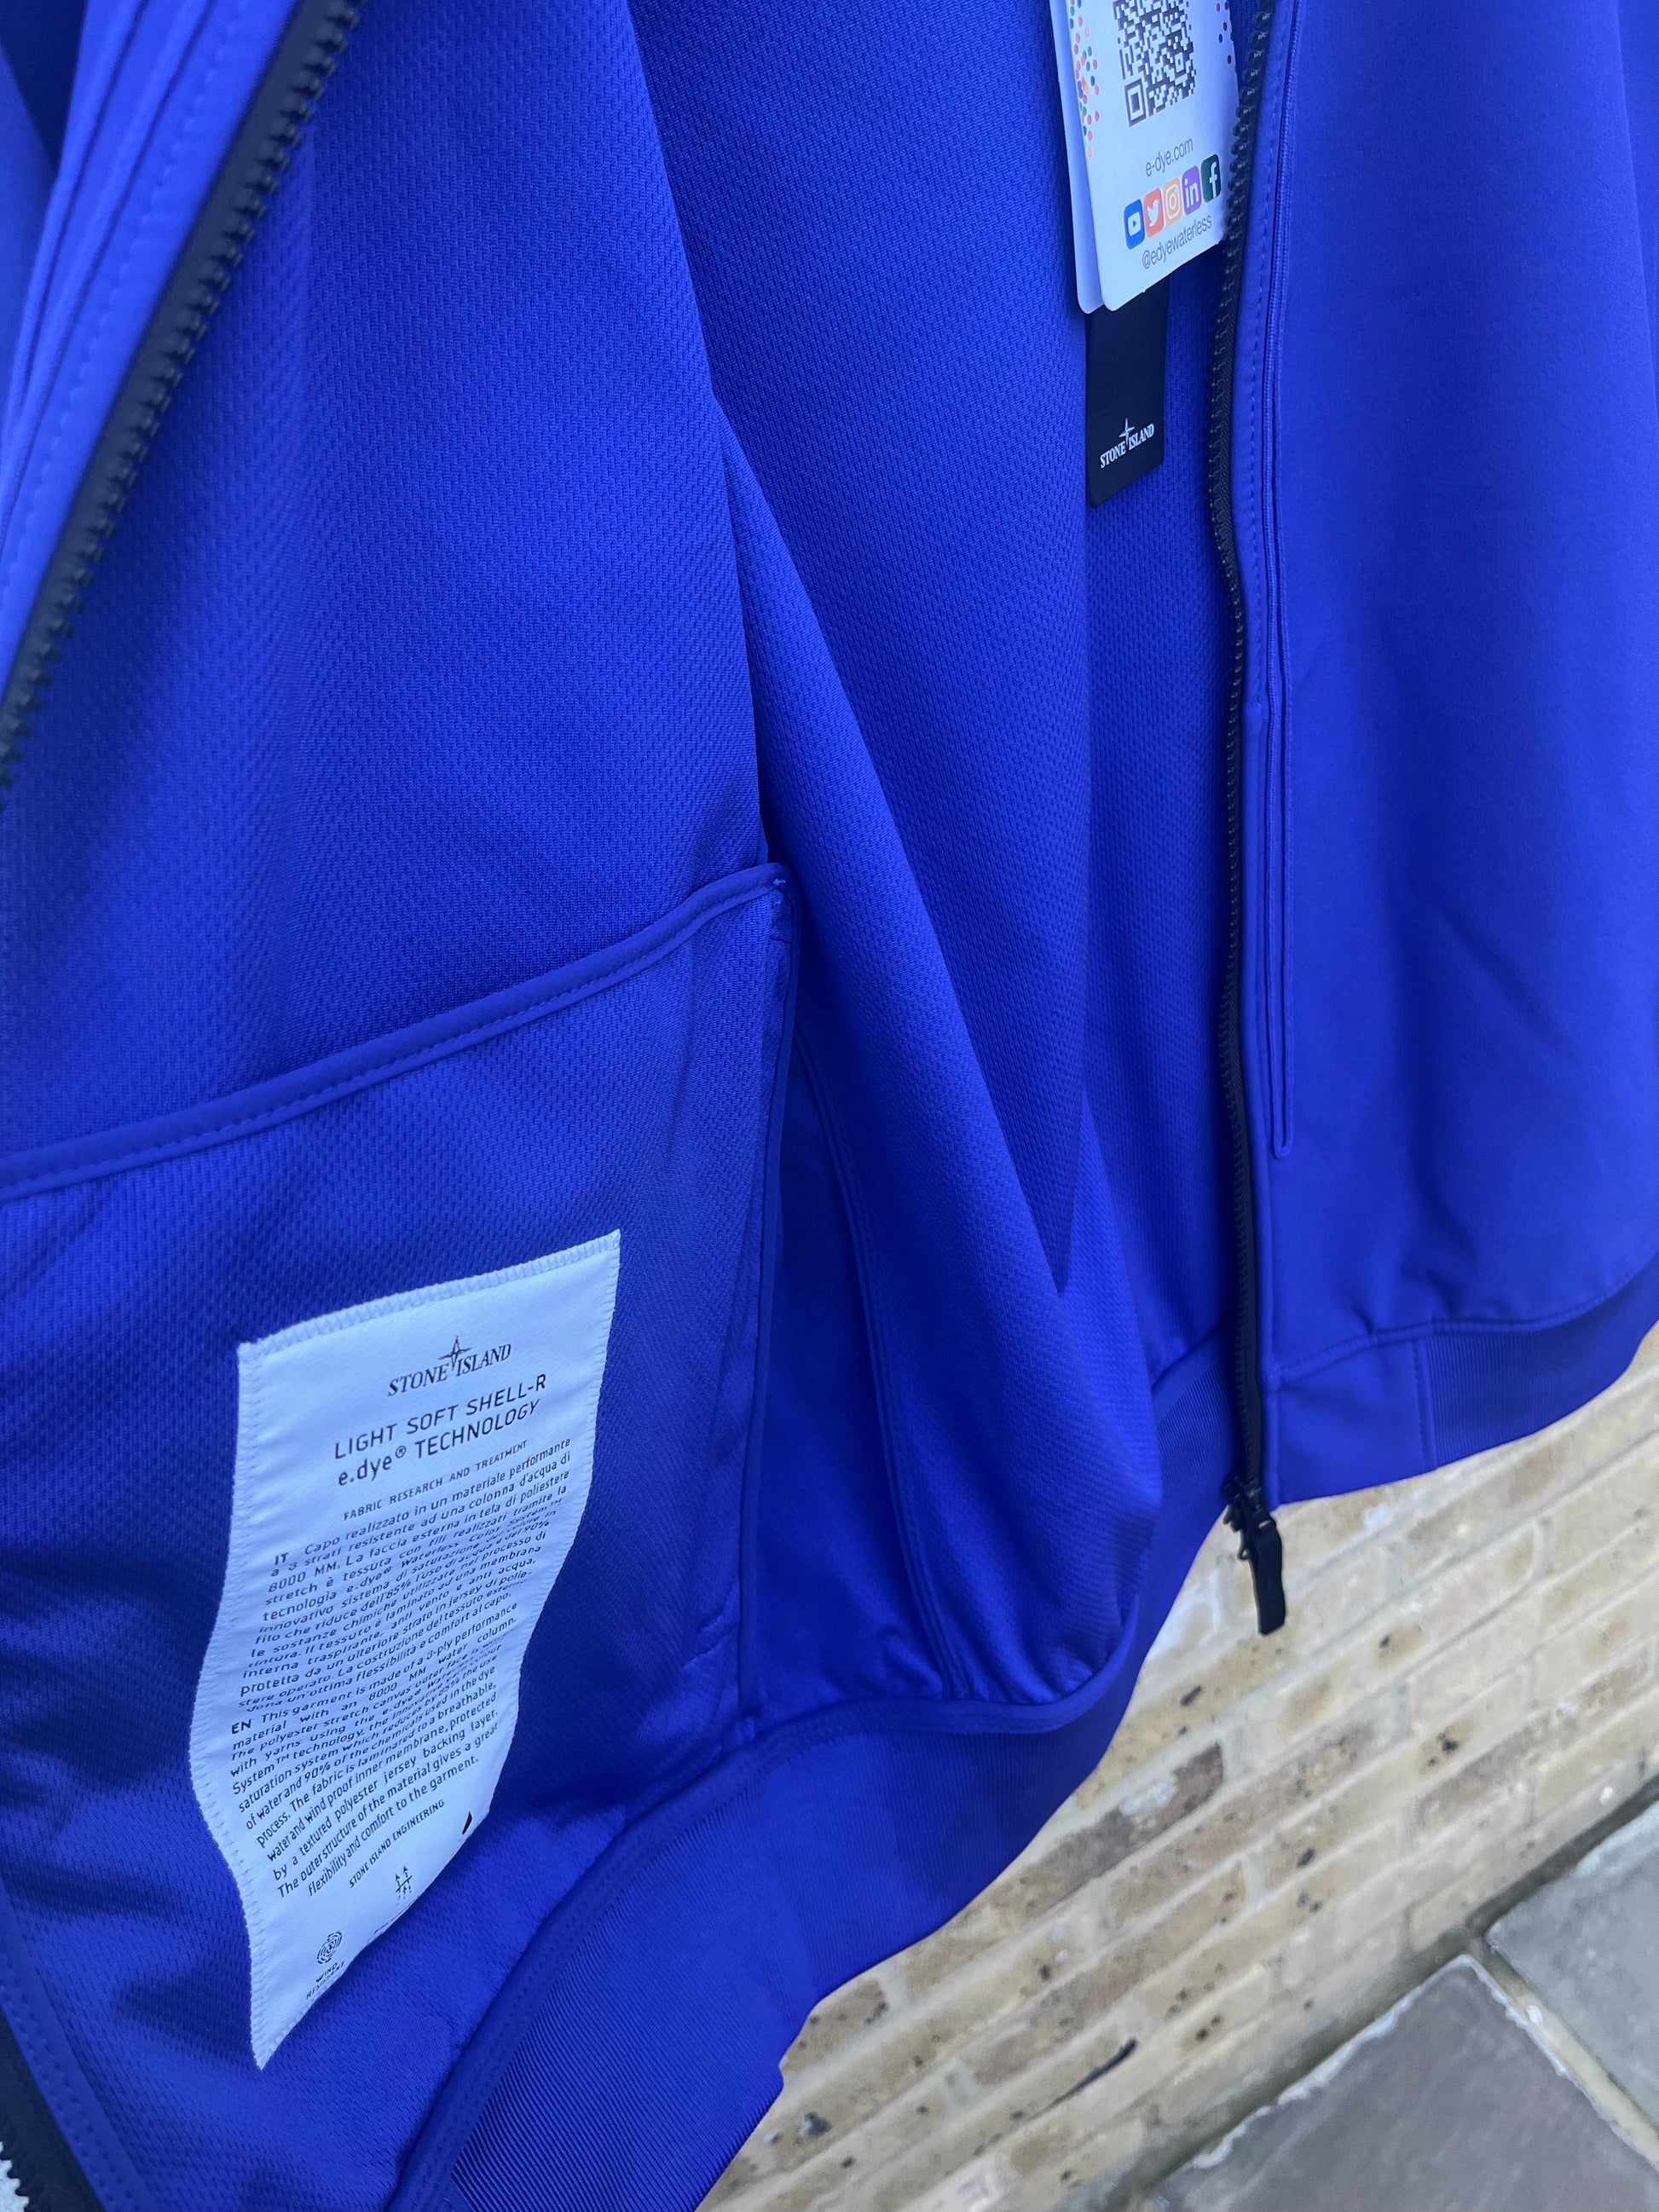 STONE ISLAND: Light Soft Shell-r_e.dye® technology jacket - Blue